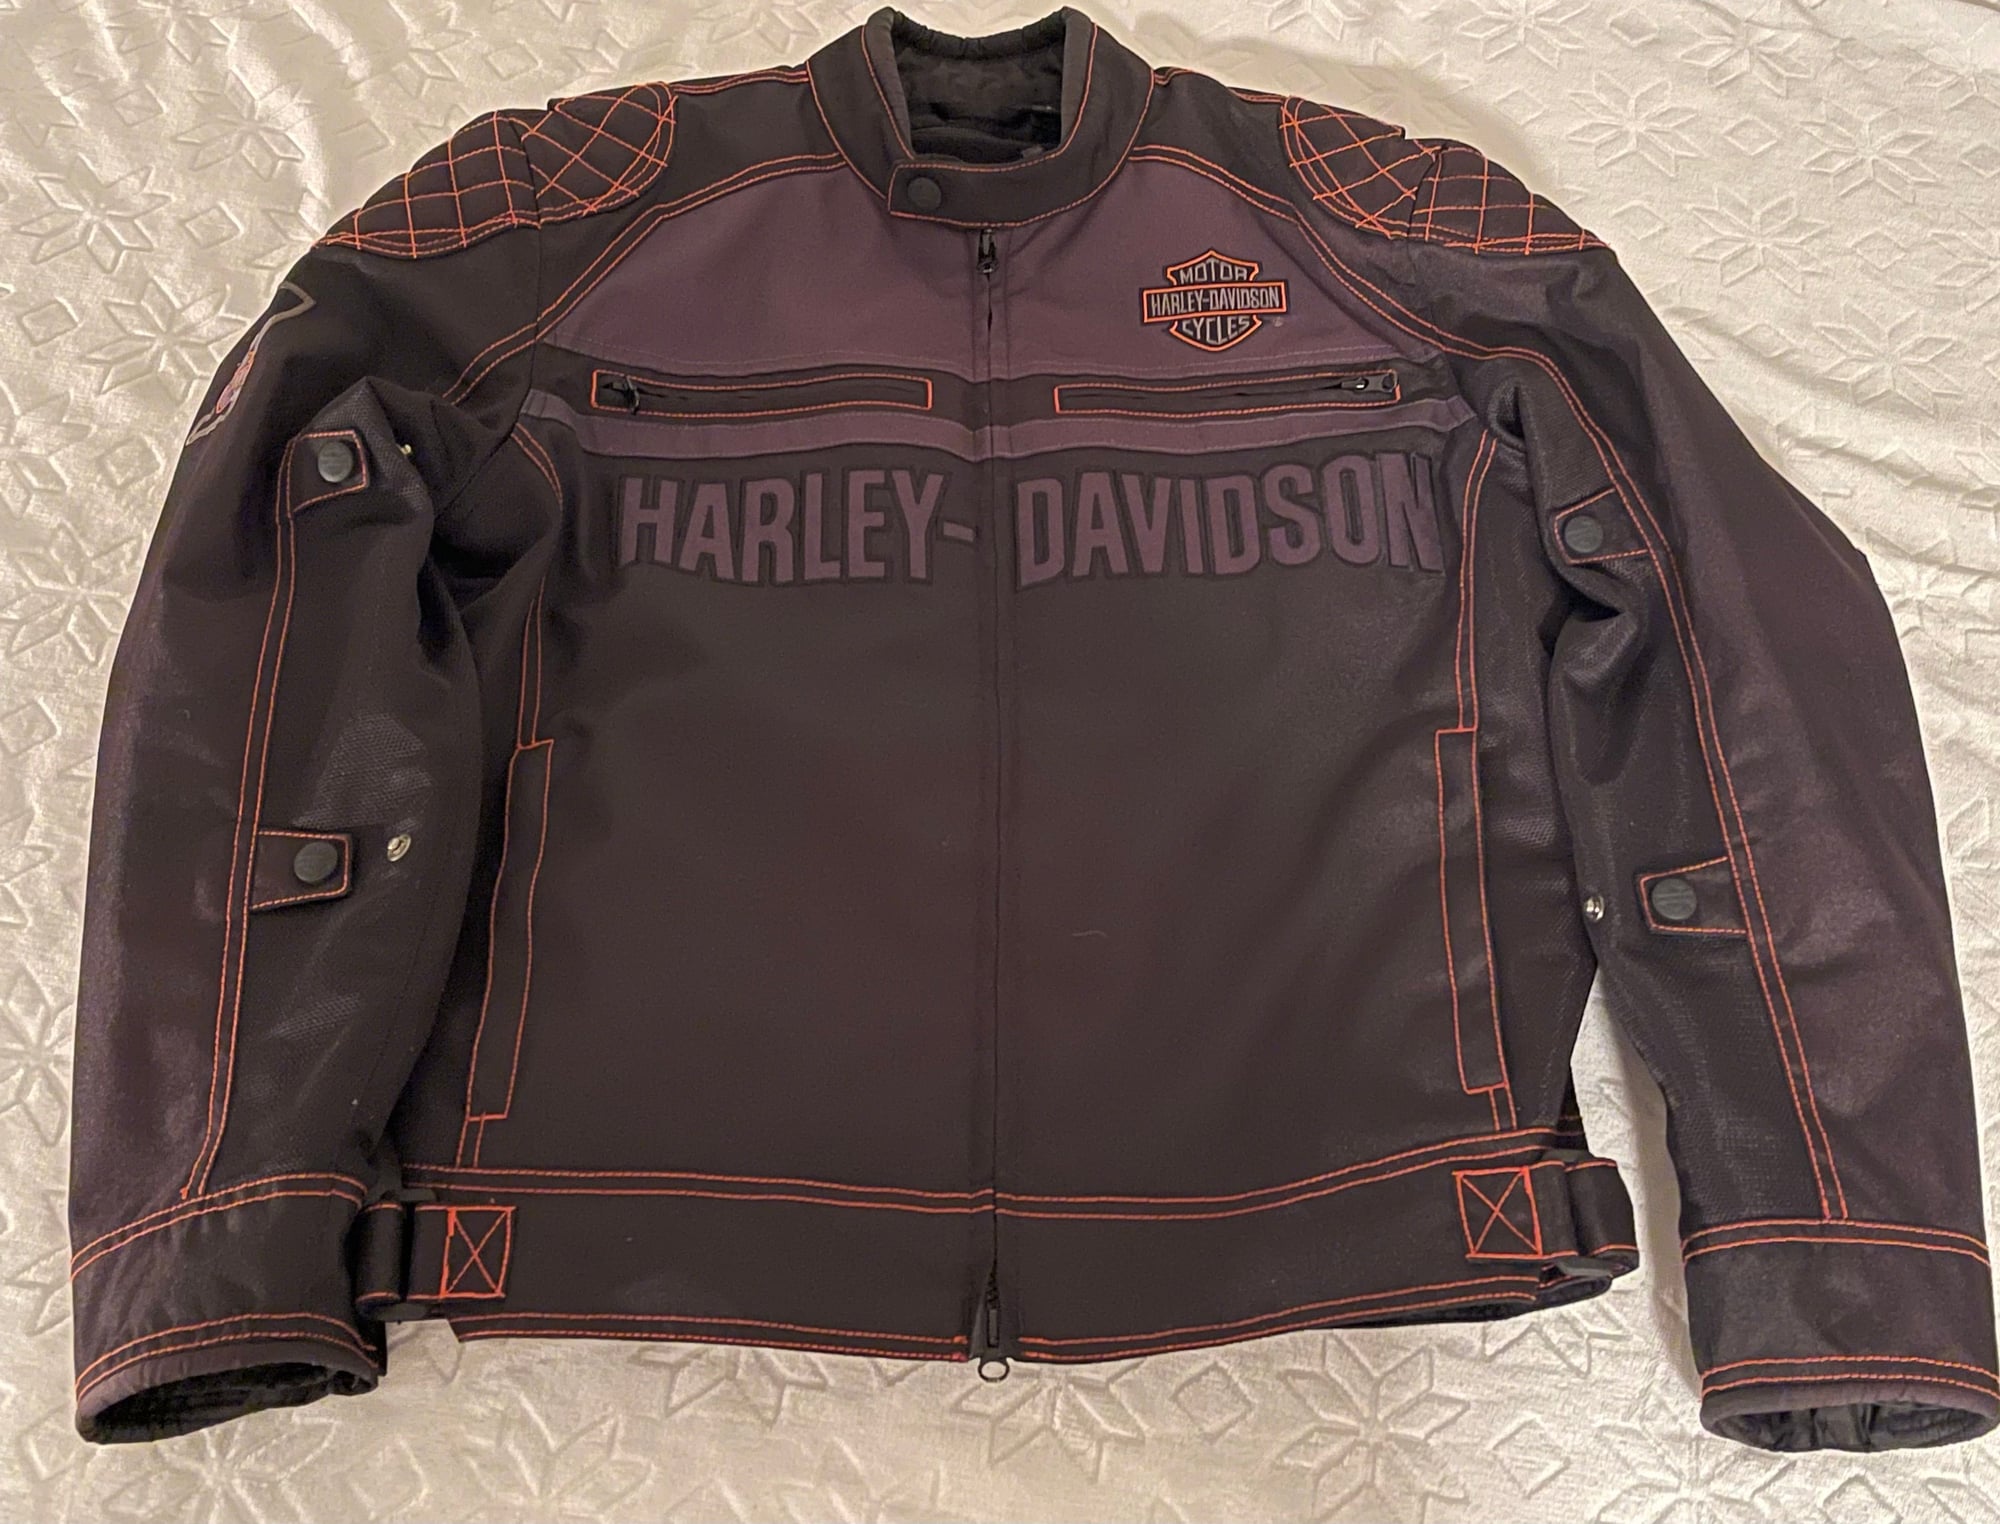 Harley Davidson skull jacket summer mesh jacket grey colored | eBay